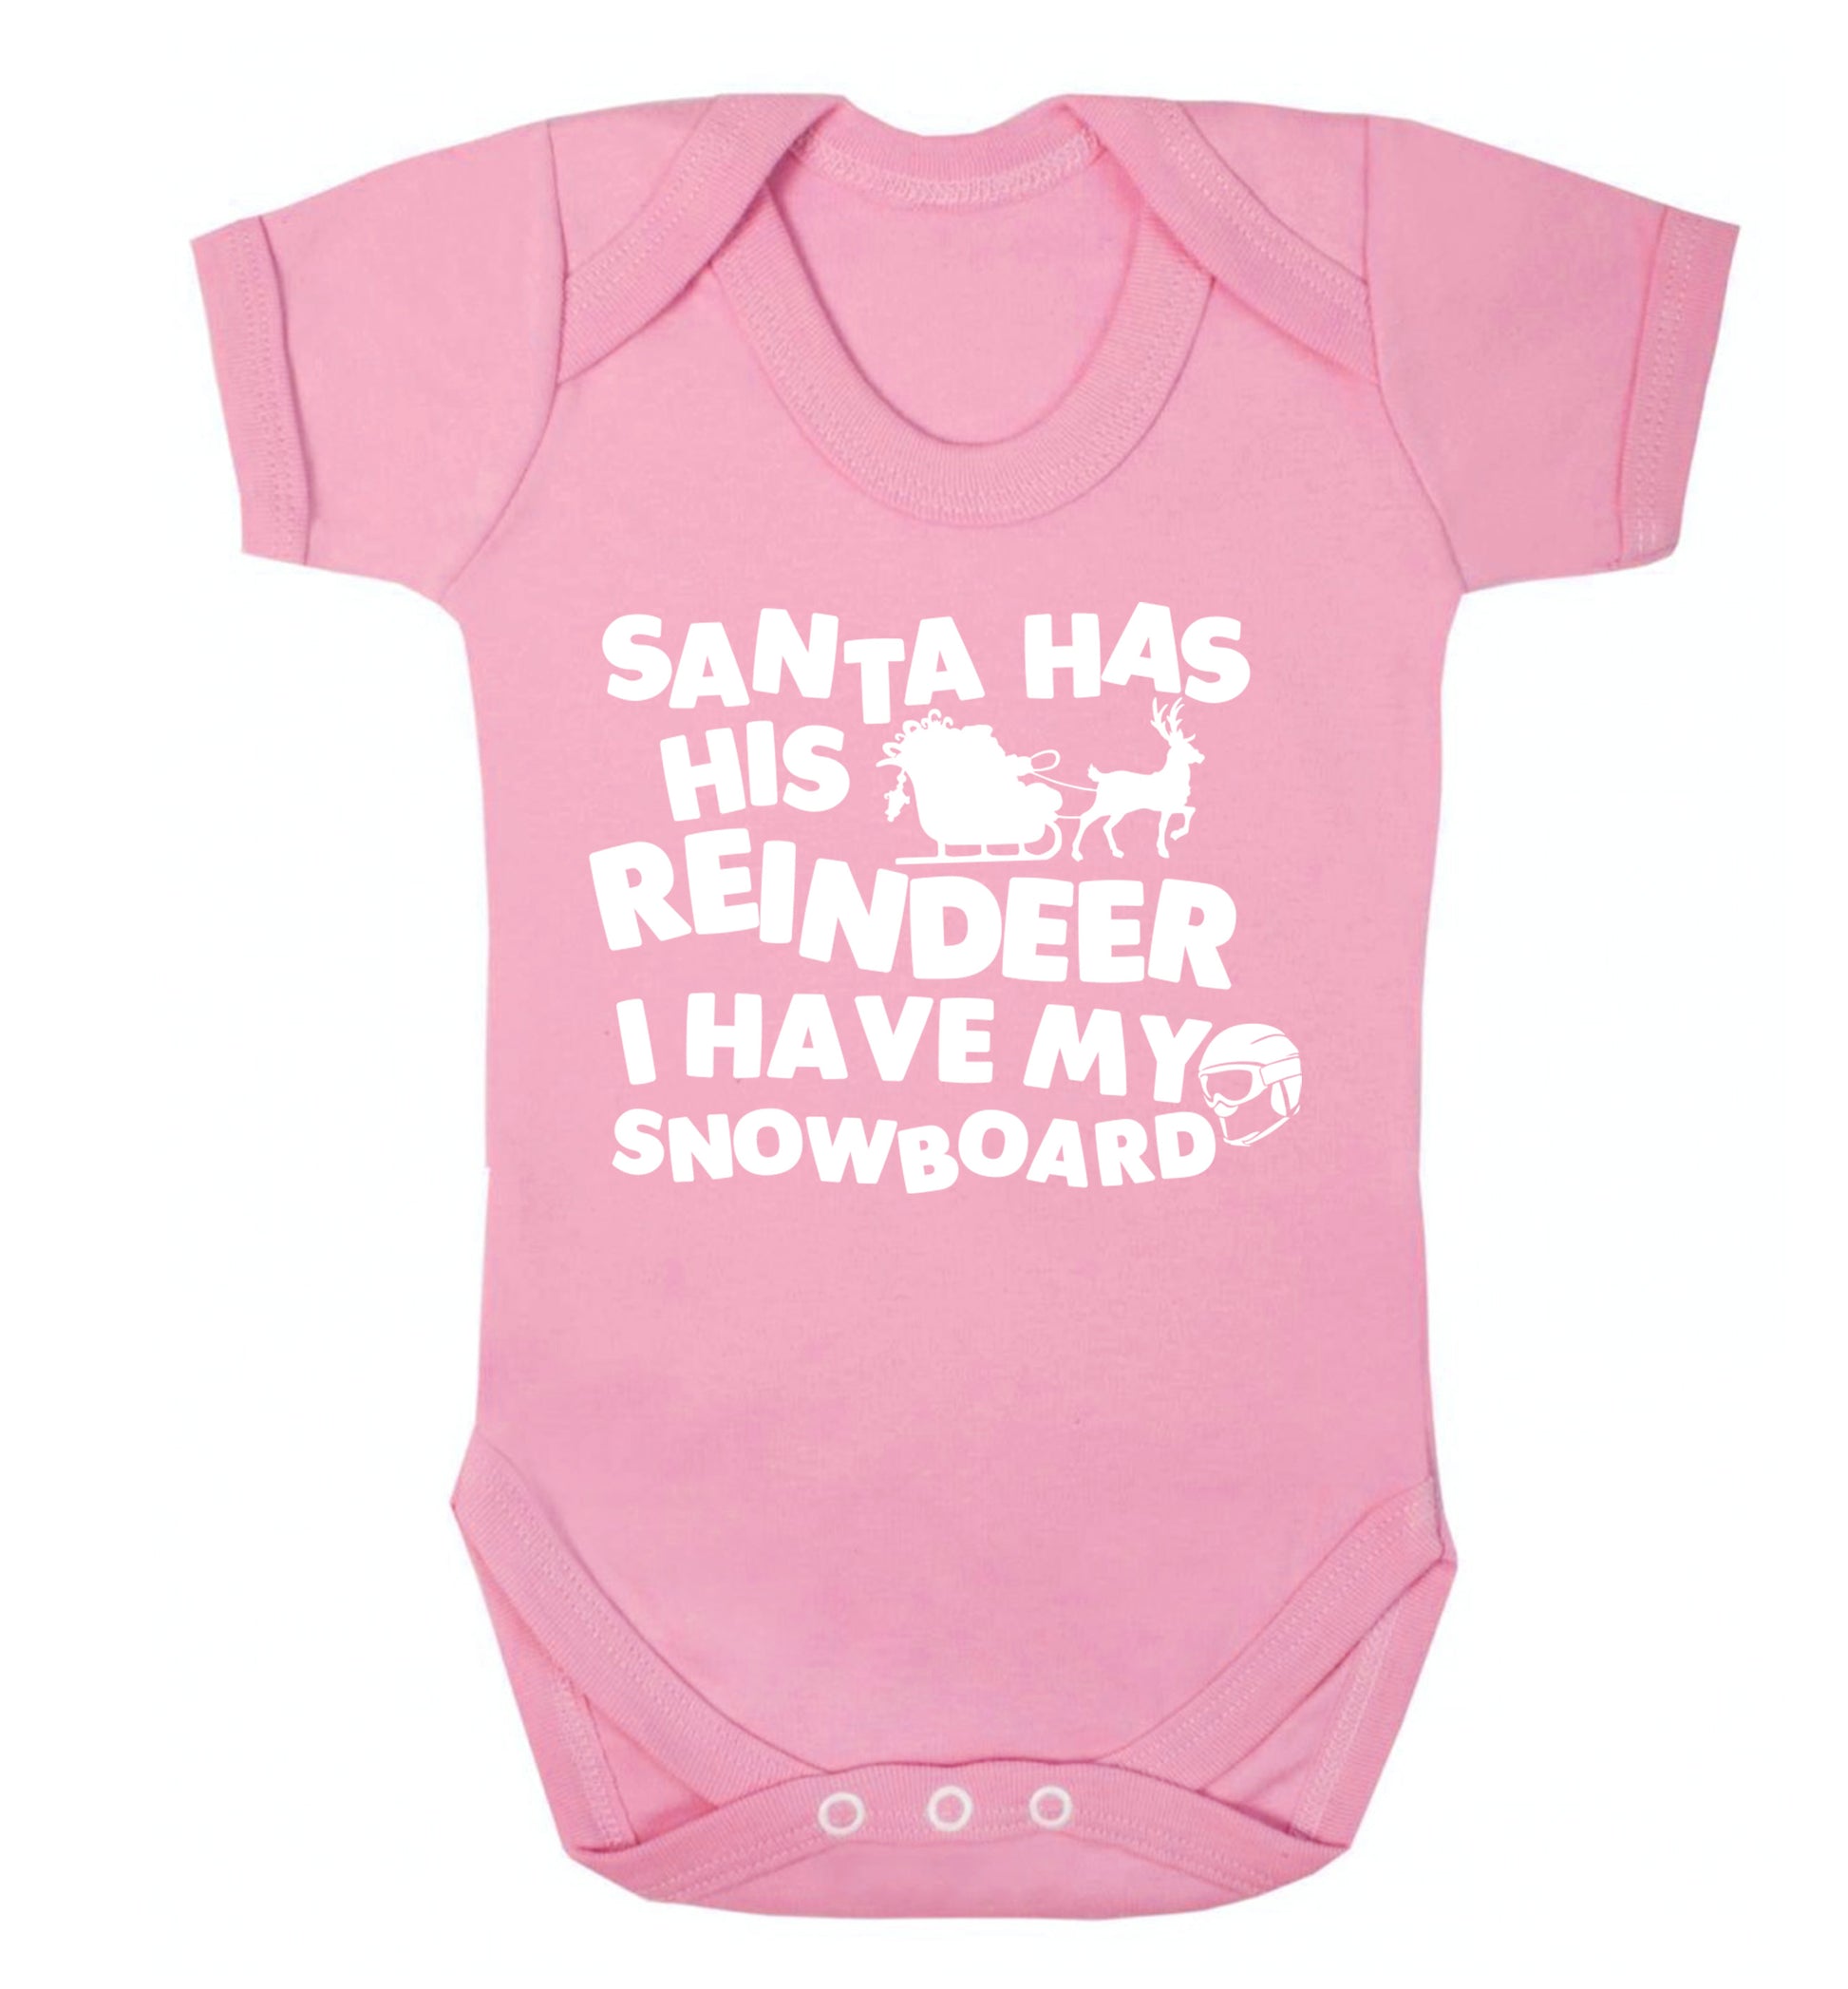 Santa has his reindeer I have my snowboard Baby Vest pale pink 18-24 months